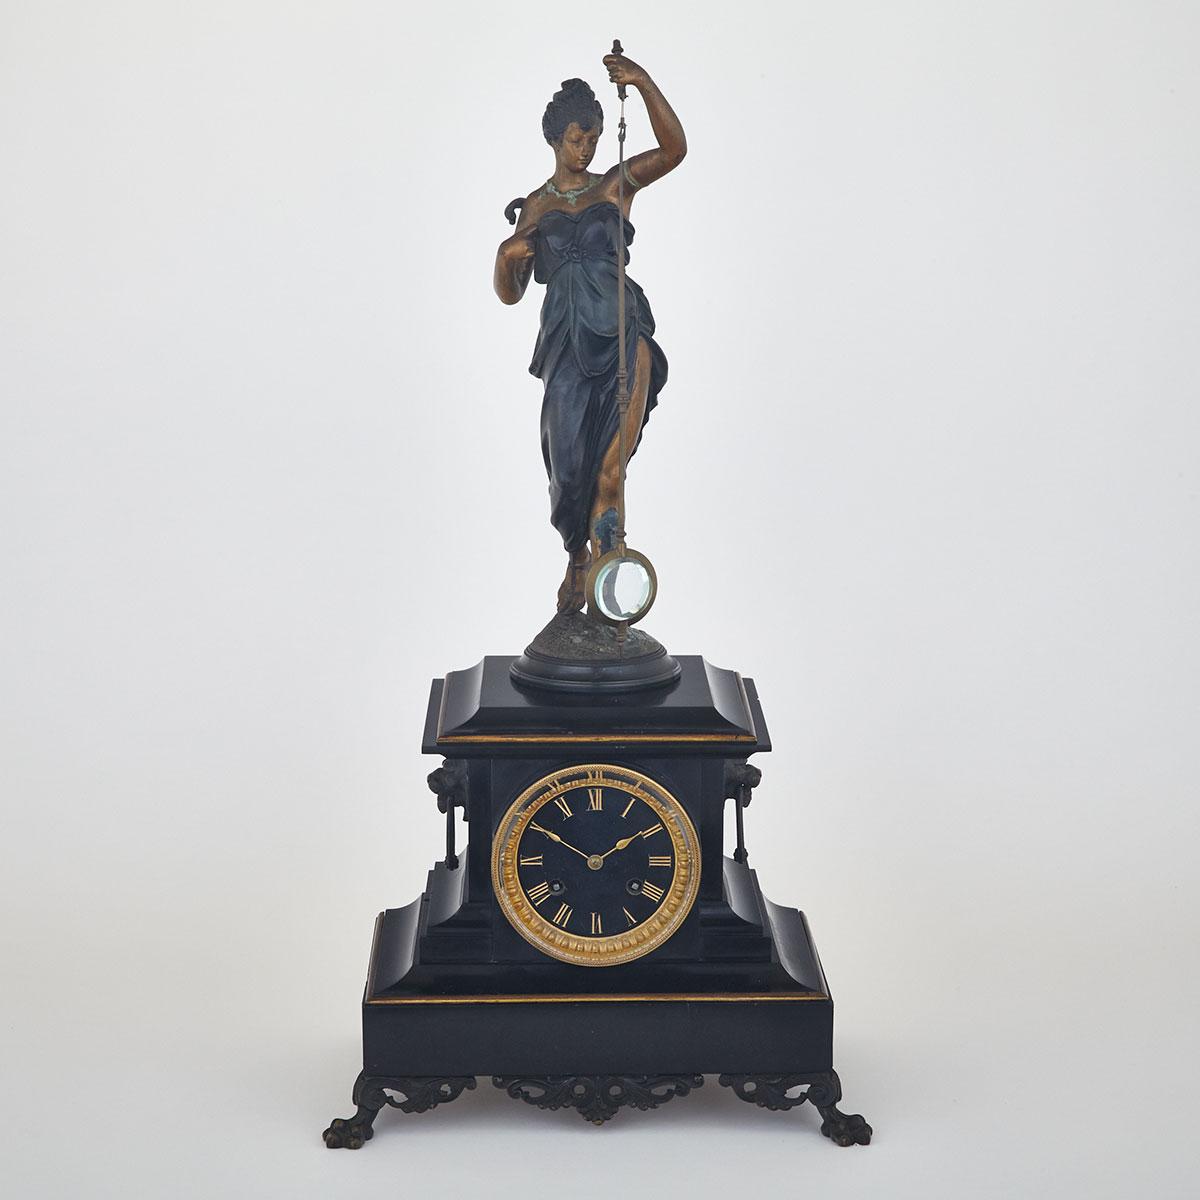 French Figural Mystery Clock, Andre Romain Guilmet, Paris, c.1870